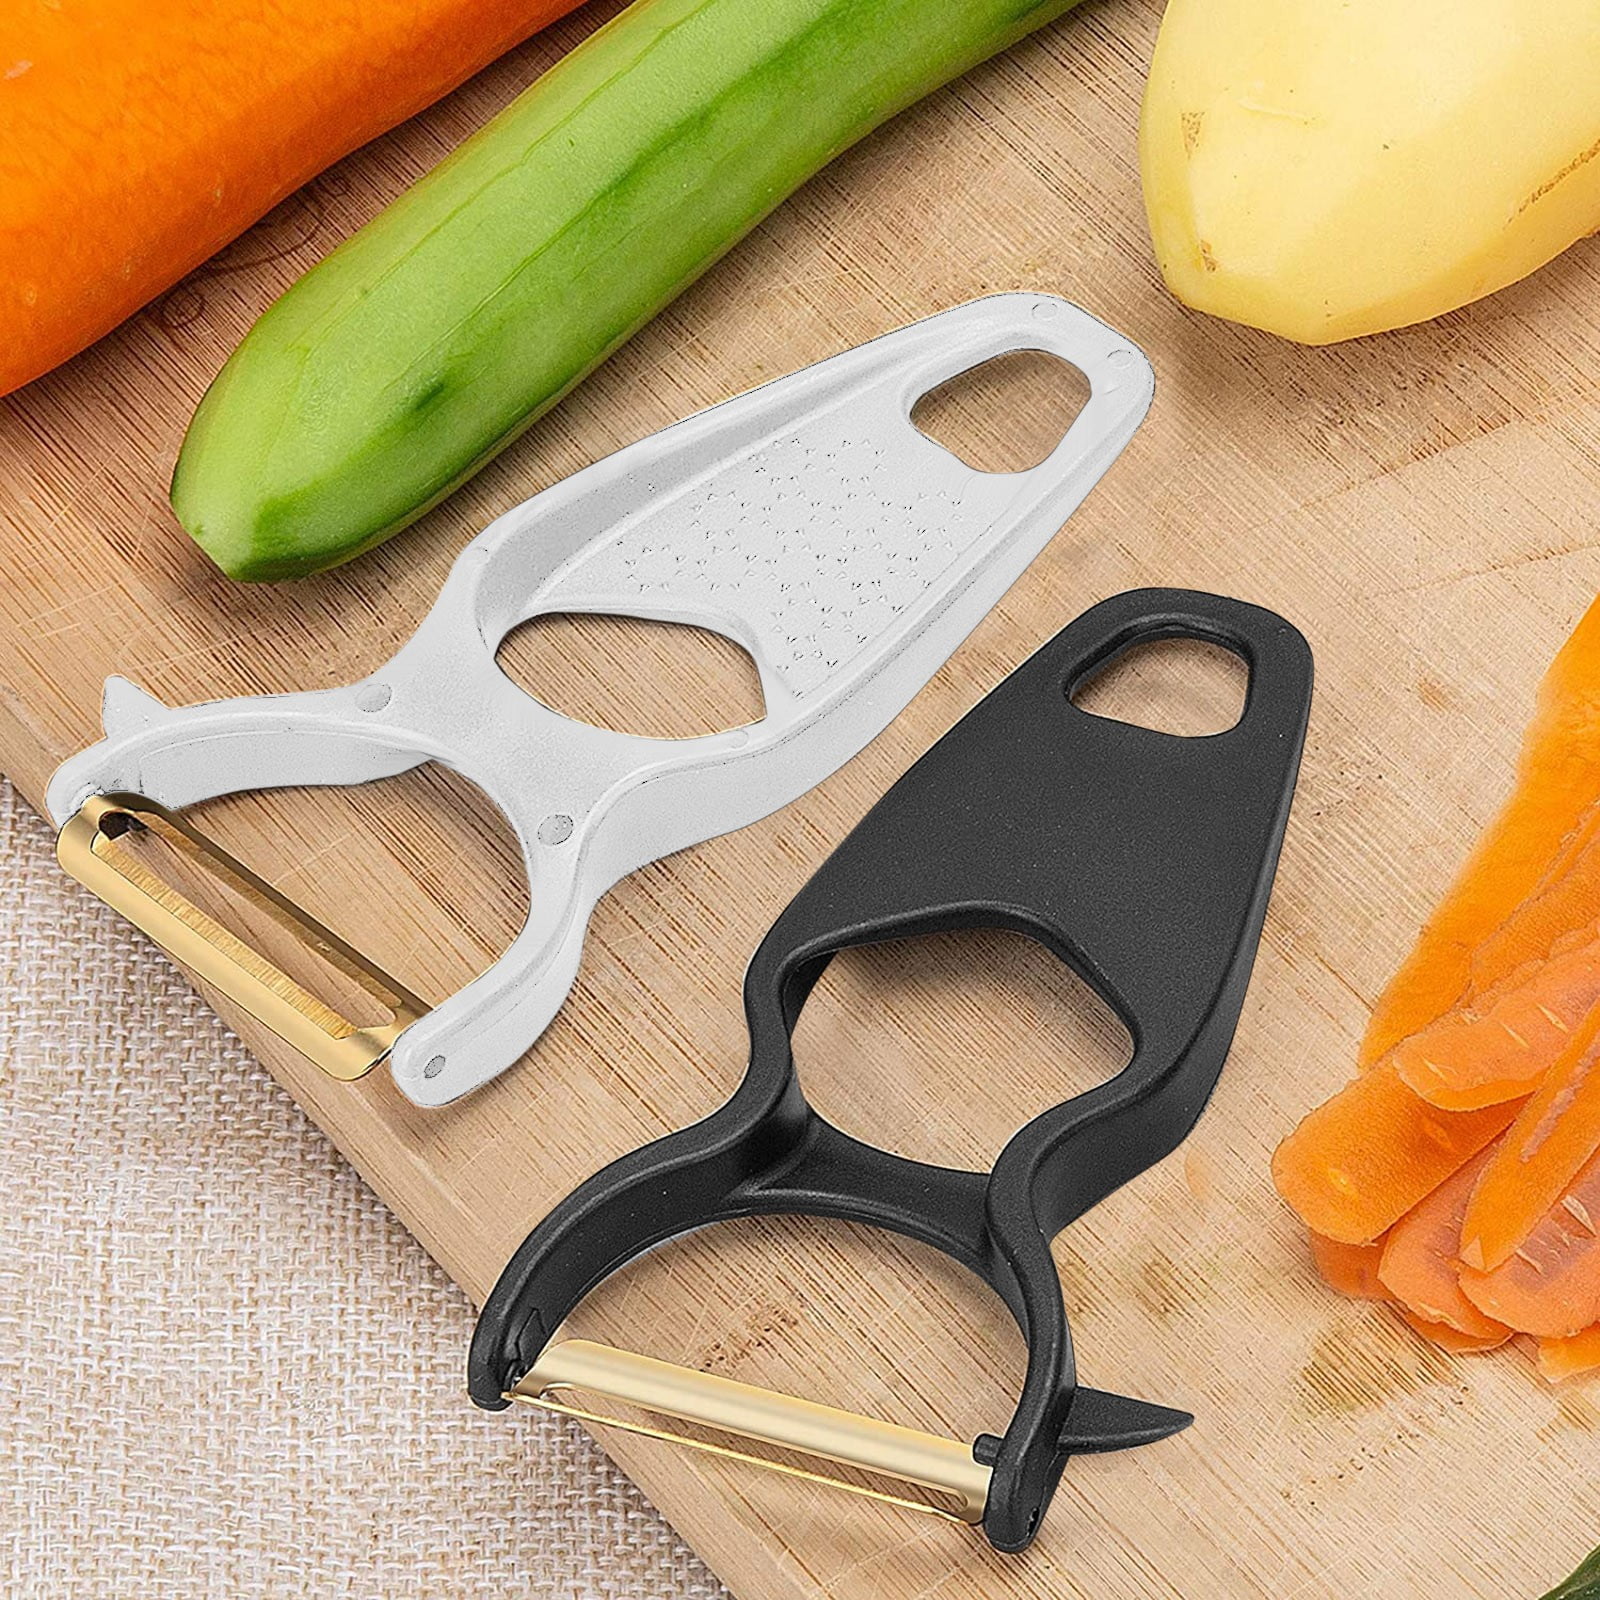 Lieteswe Manual Vegetable Cutter Potato Slicer Carrot Grater Kitchen Tool